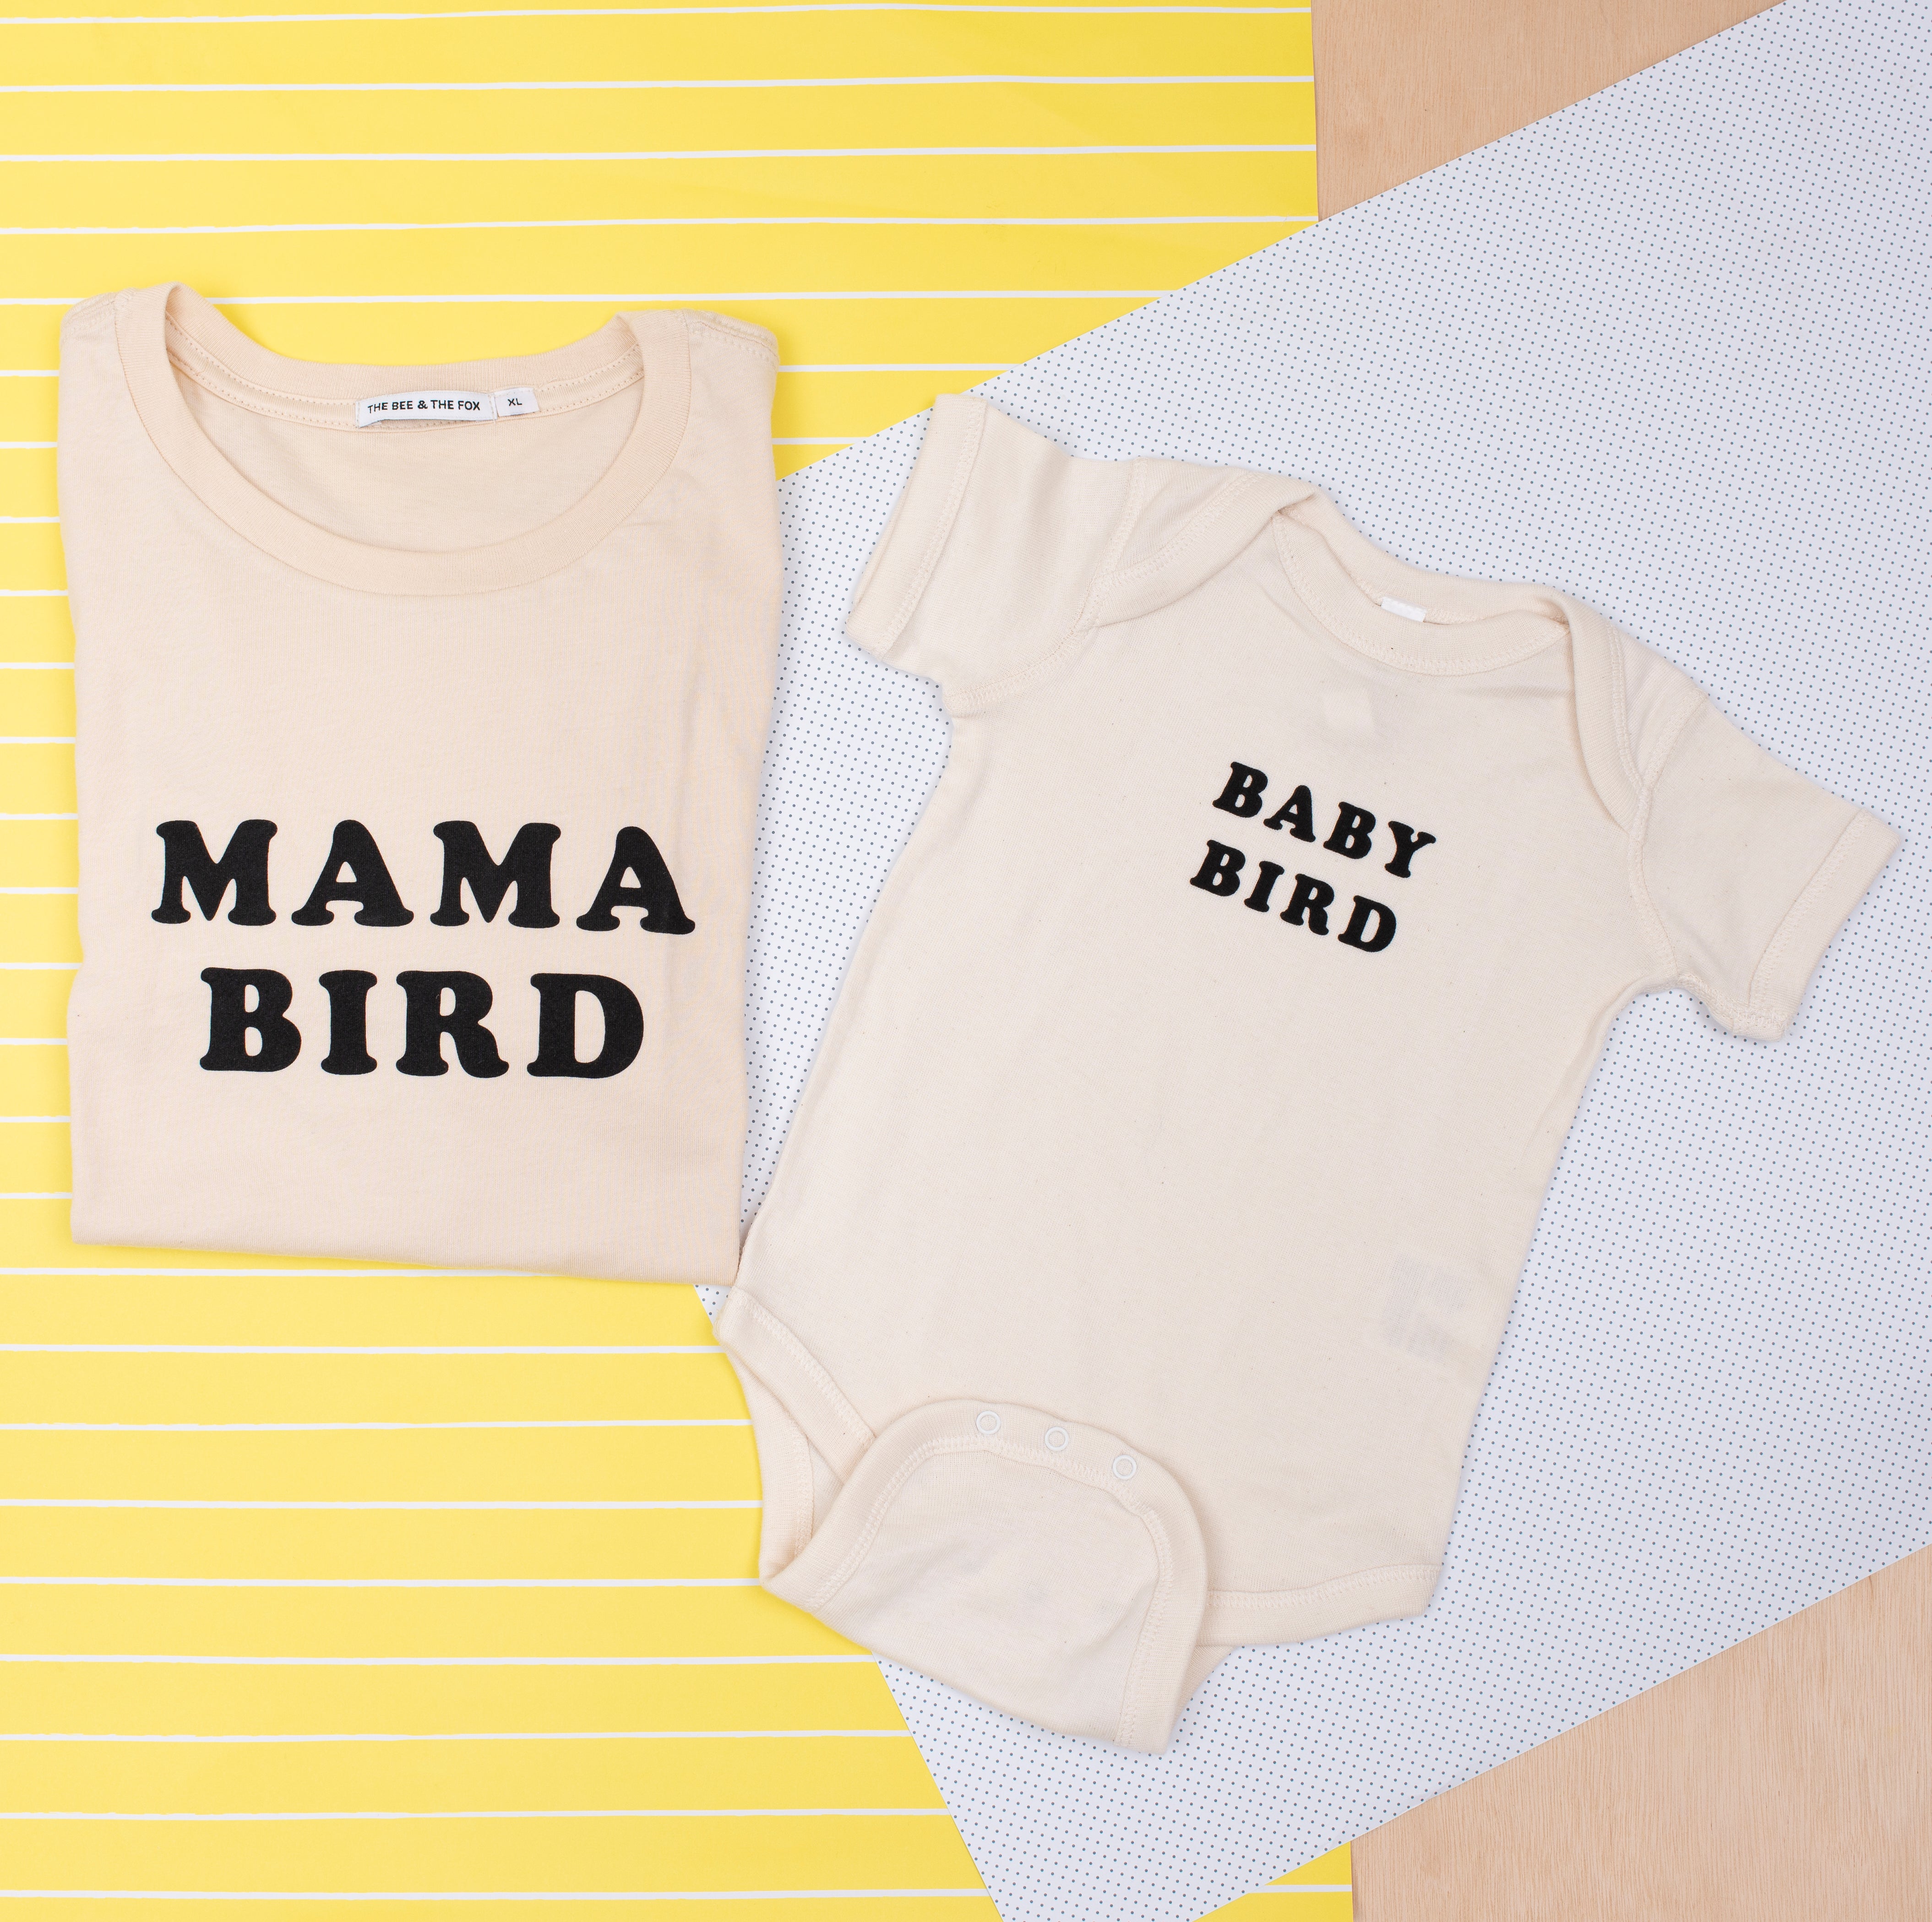 Mama Bird + Baby Bird